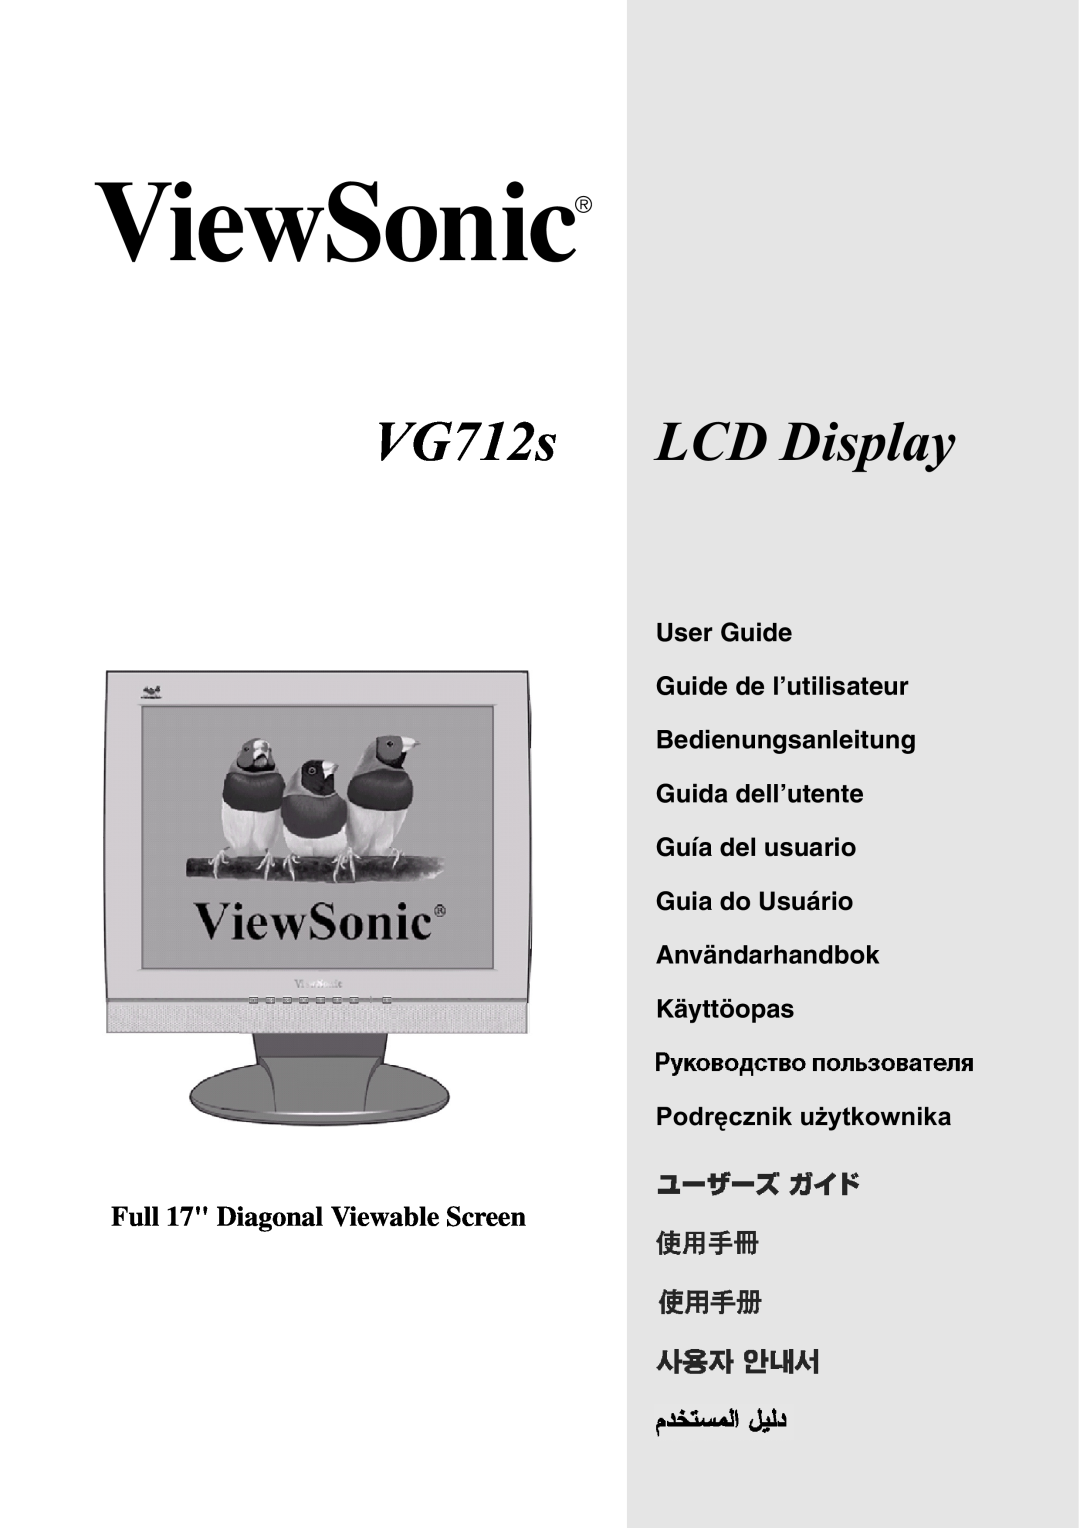 ViewSonic manual User Guide Guide de l’utilisateur Bedienungsanleitung, Käyttöopas, VG712s LCD Display 